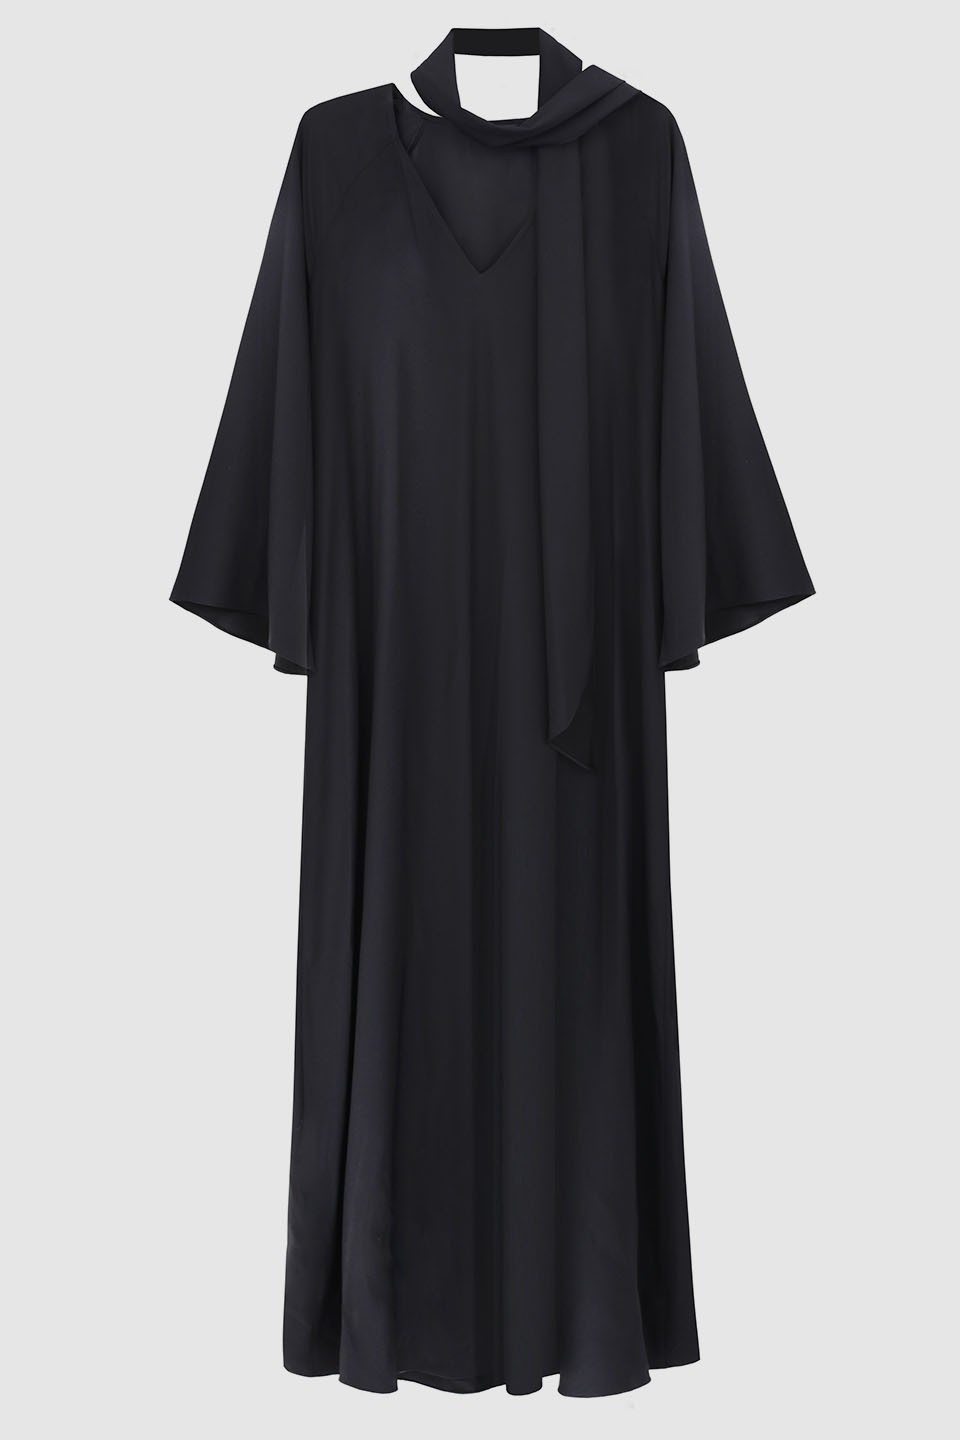 Black silk dress with a scarf